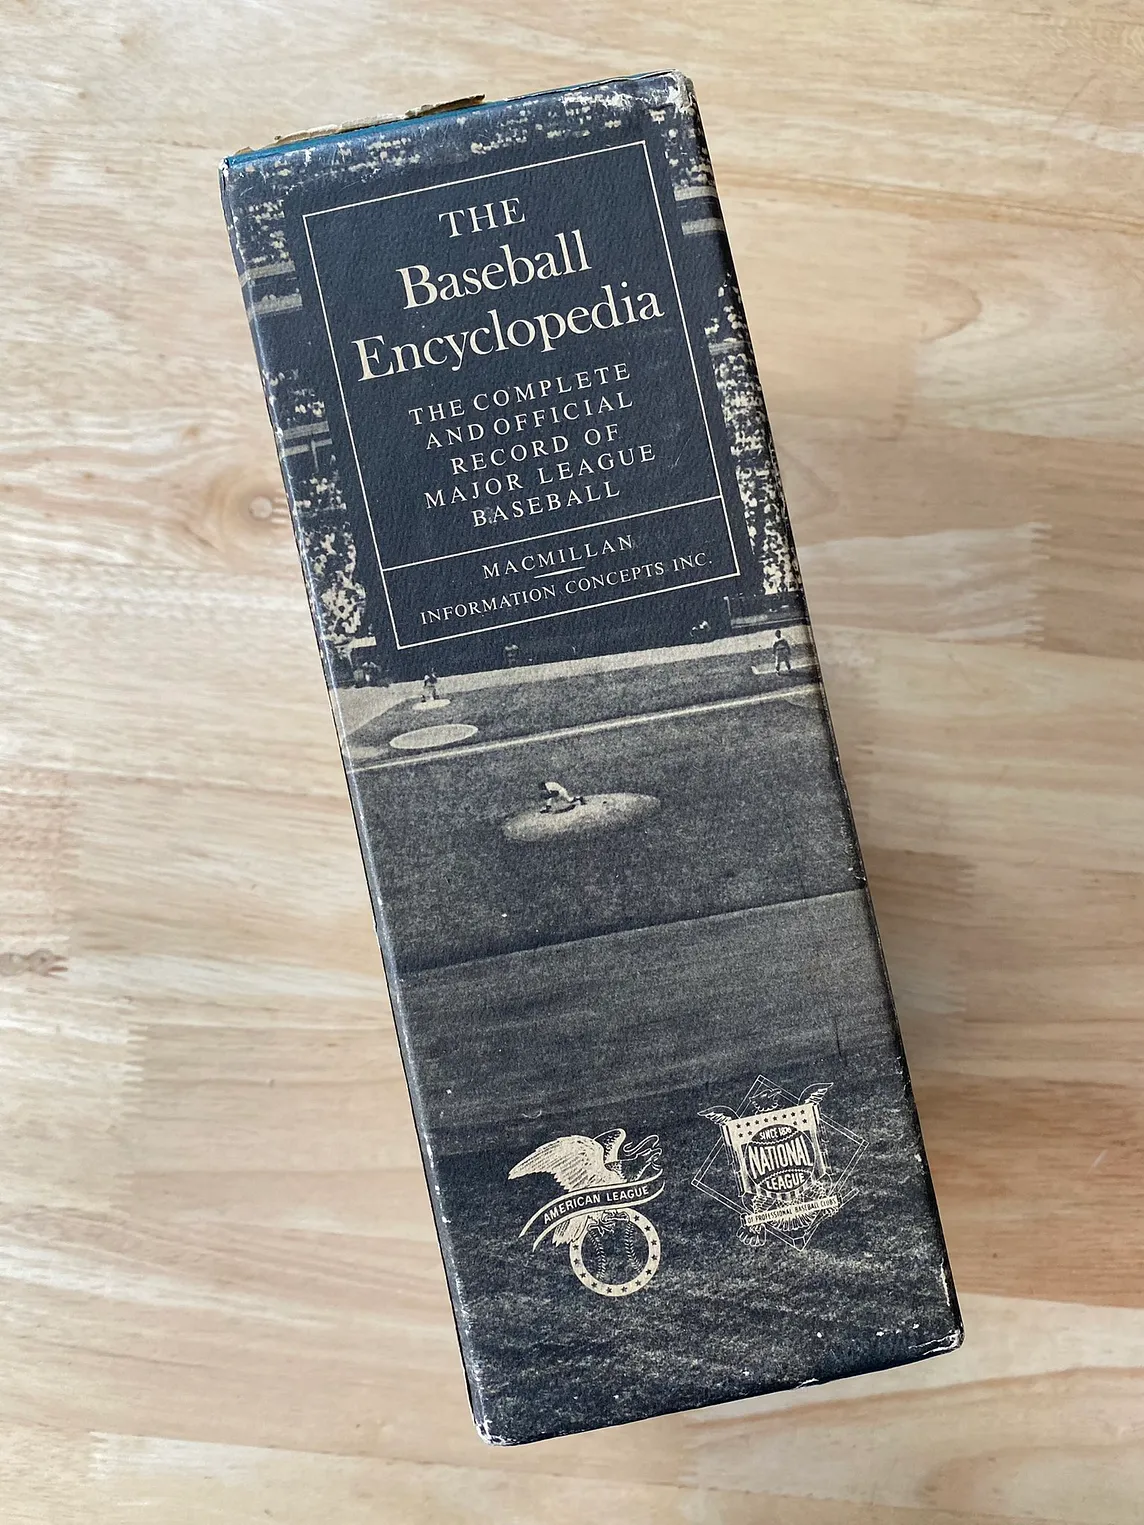 Macmillan: A researcher’s fond, tough look at The Baseball Encyclopedia